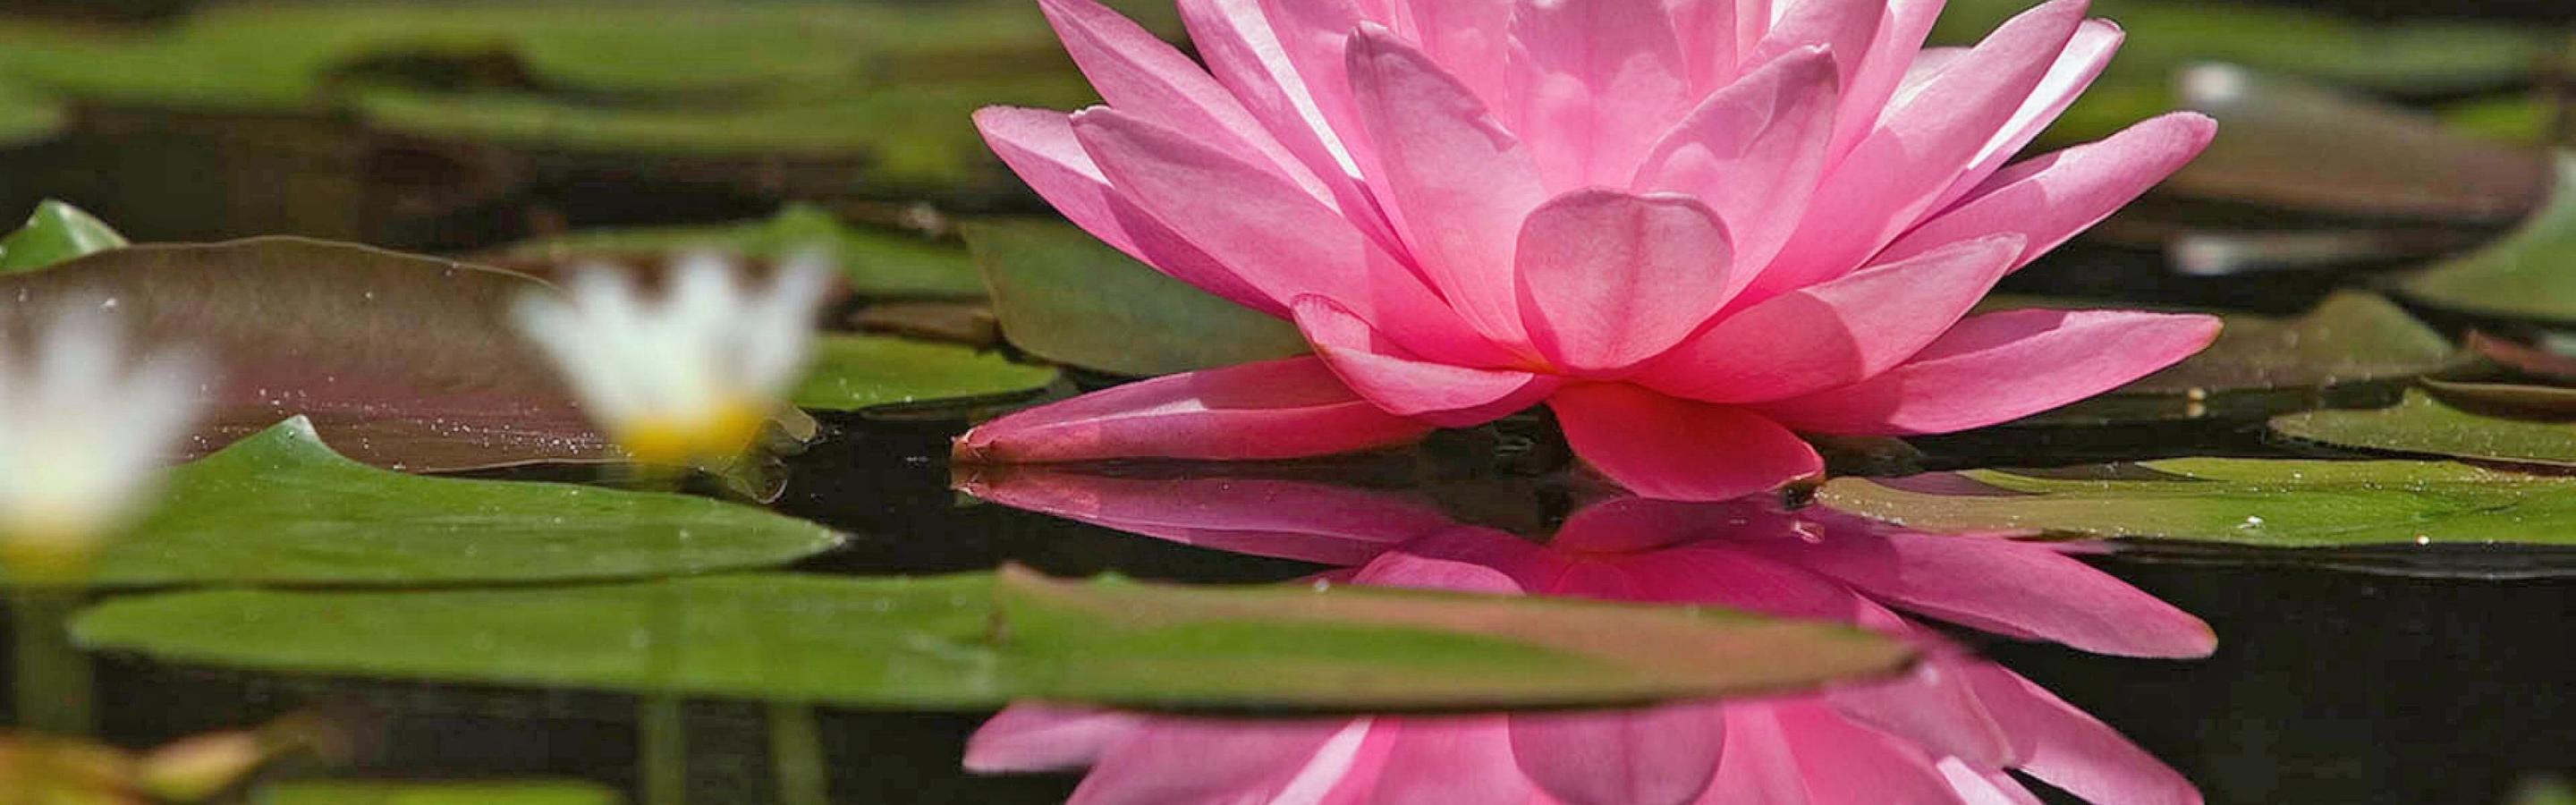 Pink lotus on the water - Water flower wallpaper